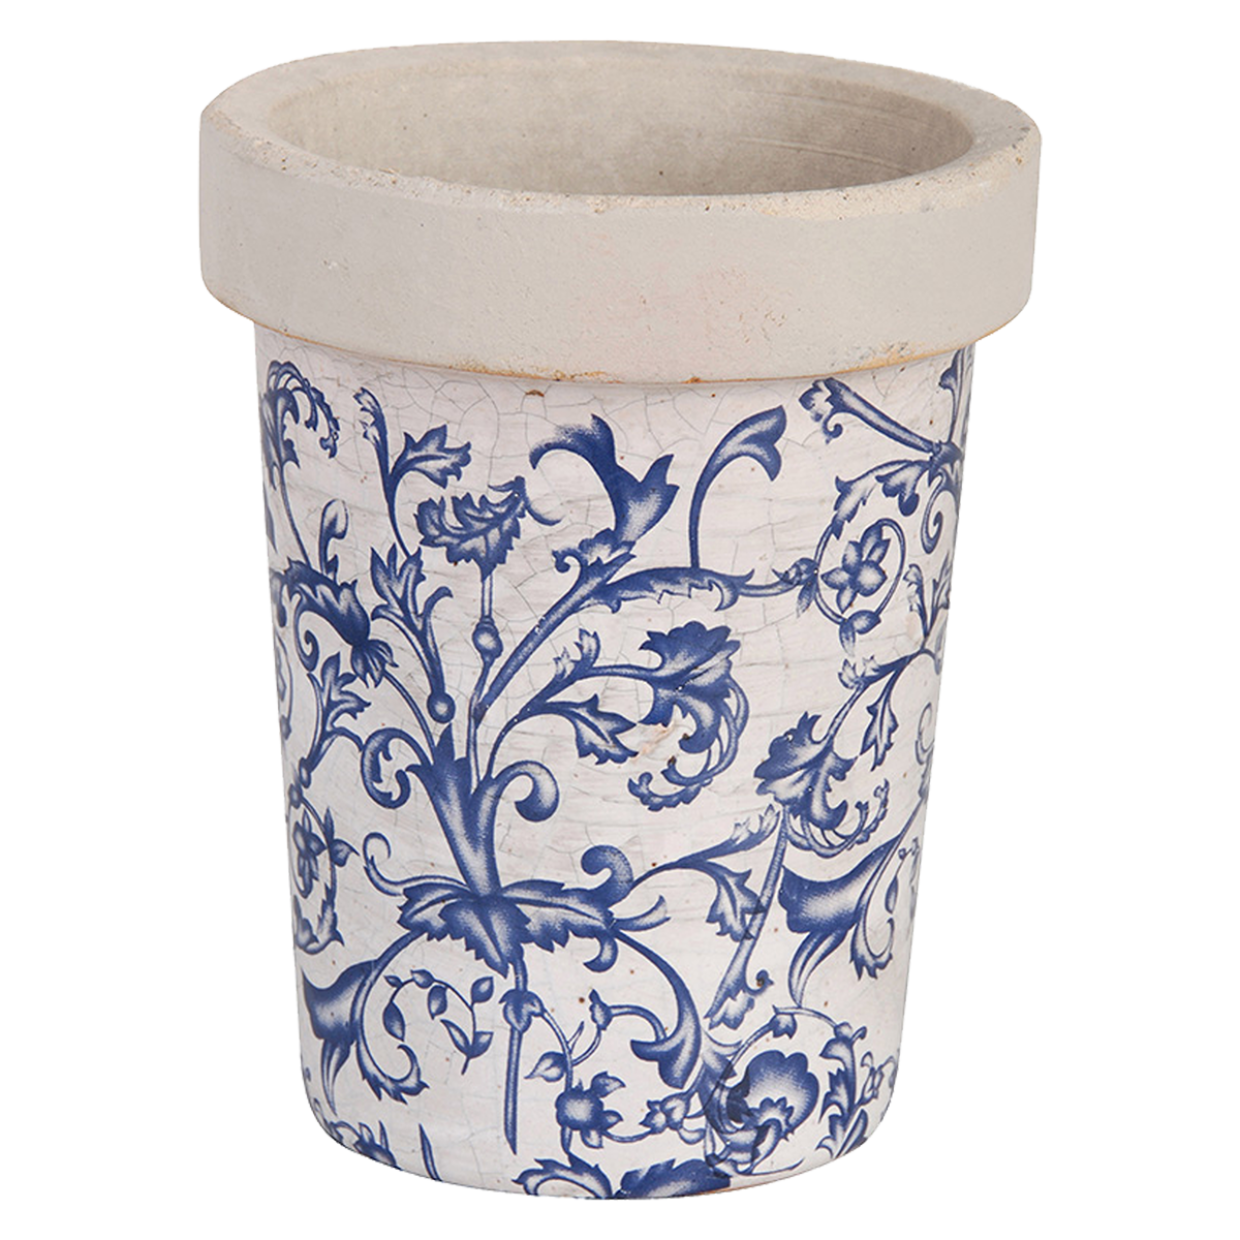 AC89 pot de fleurs bleu blanc esschert design chez ugo et lea